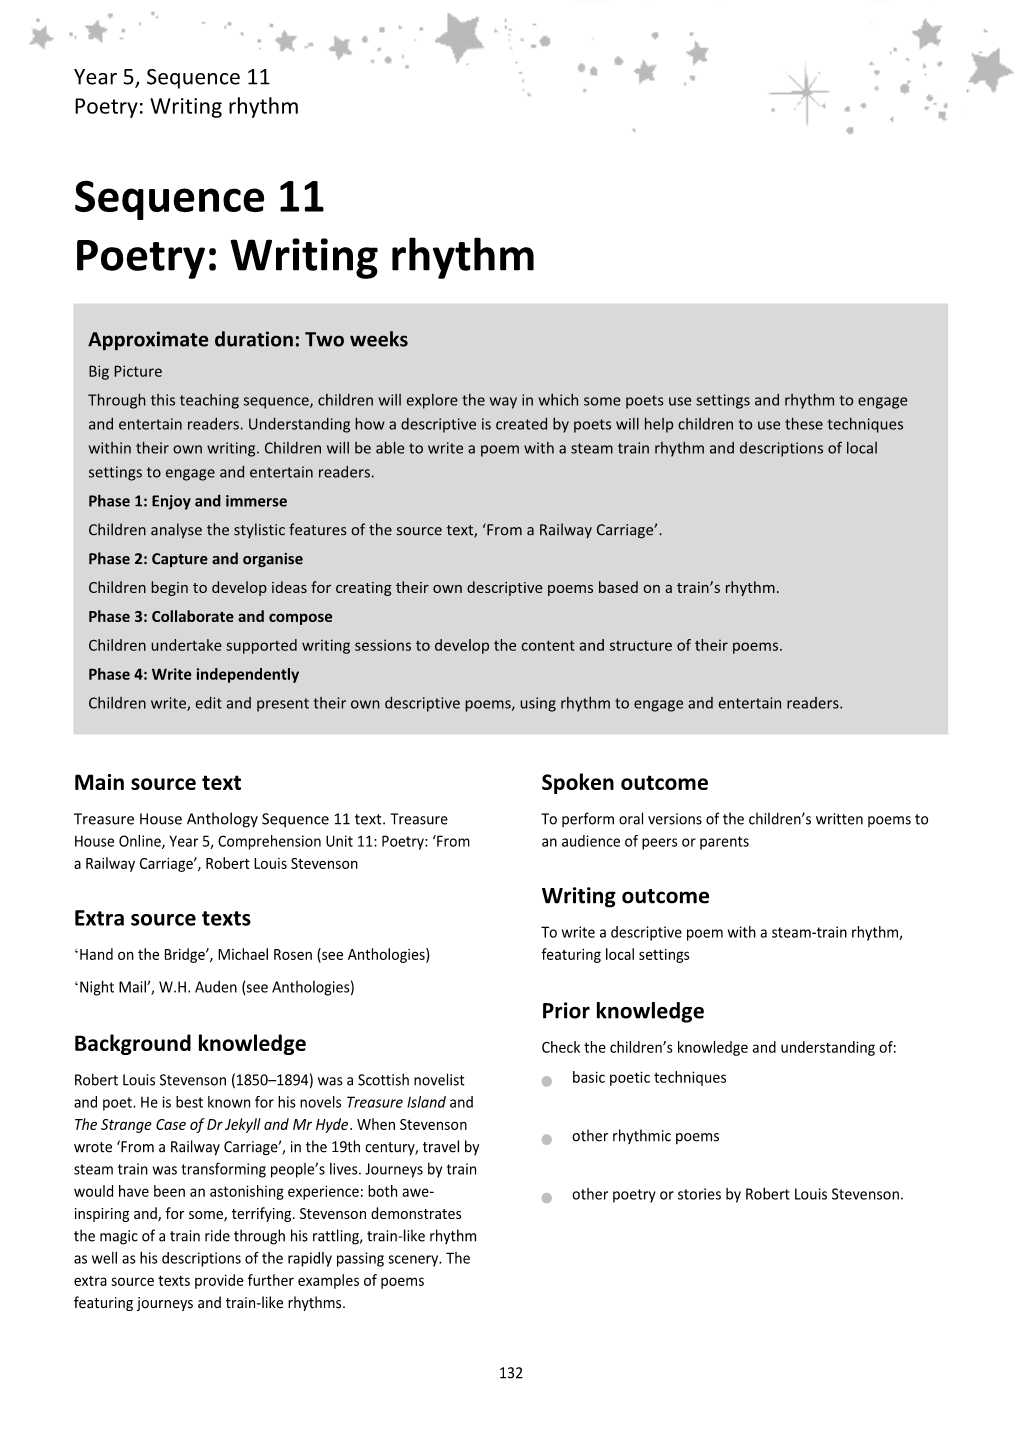 Poetry: Writing Rhythm